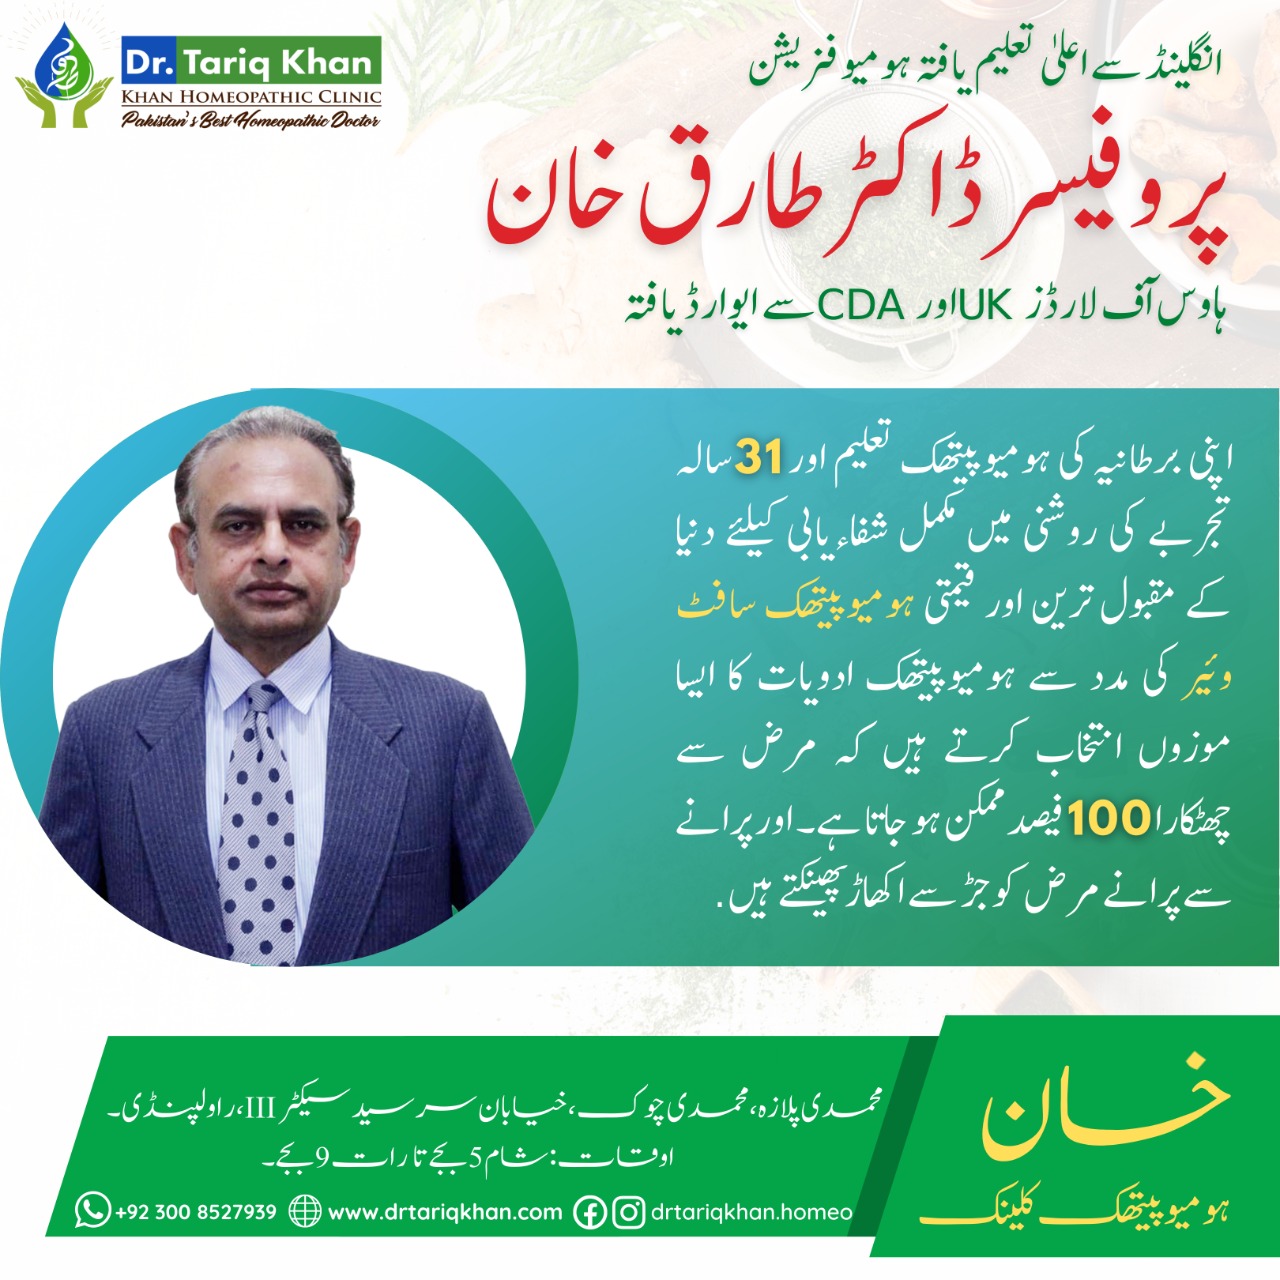 About profesor Dr. Tariq Khan